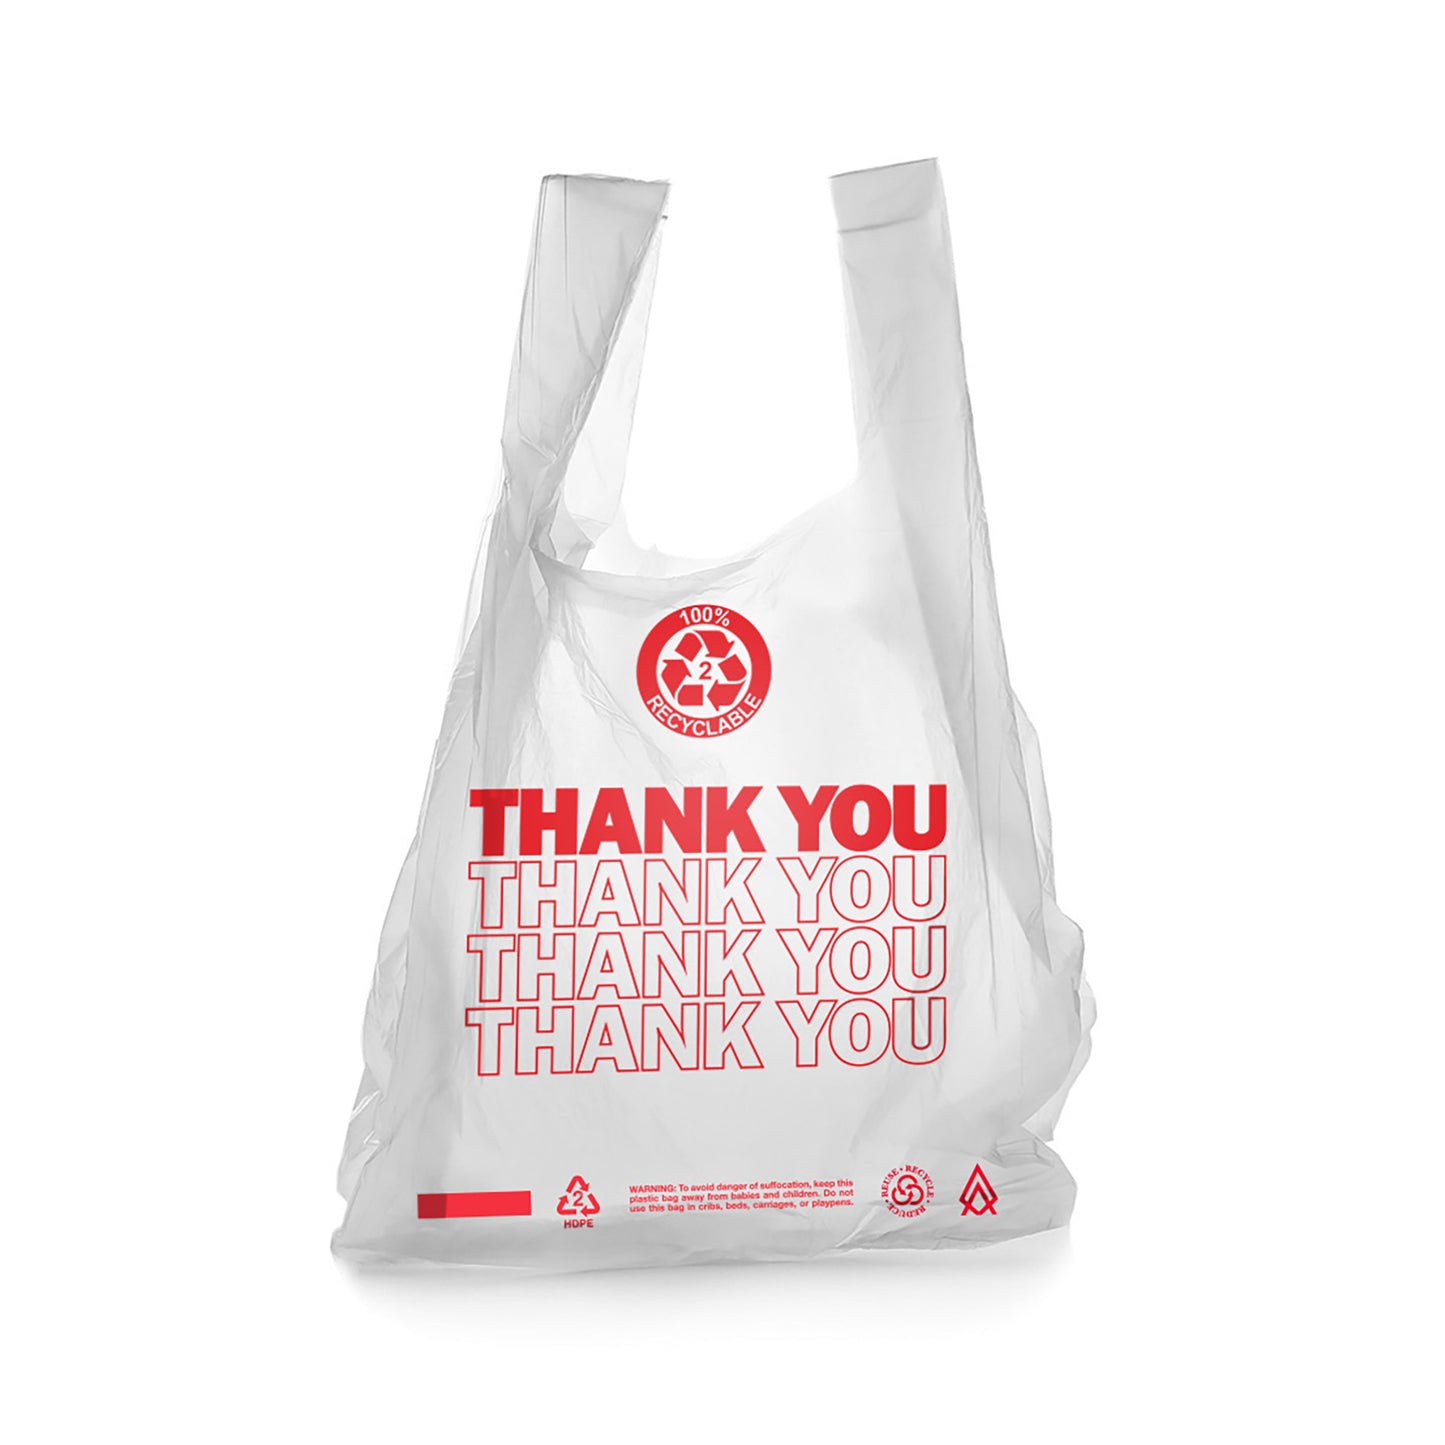 T-Shirt Bag - "Thank You" -  White Plastic